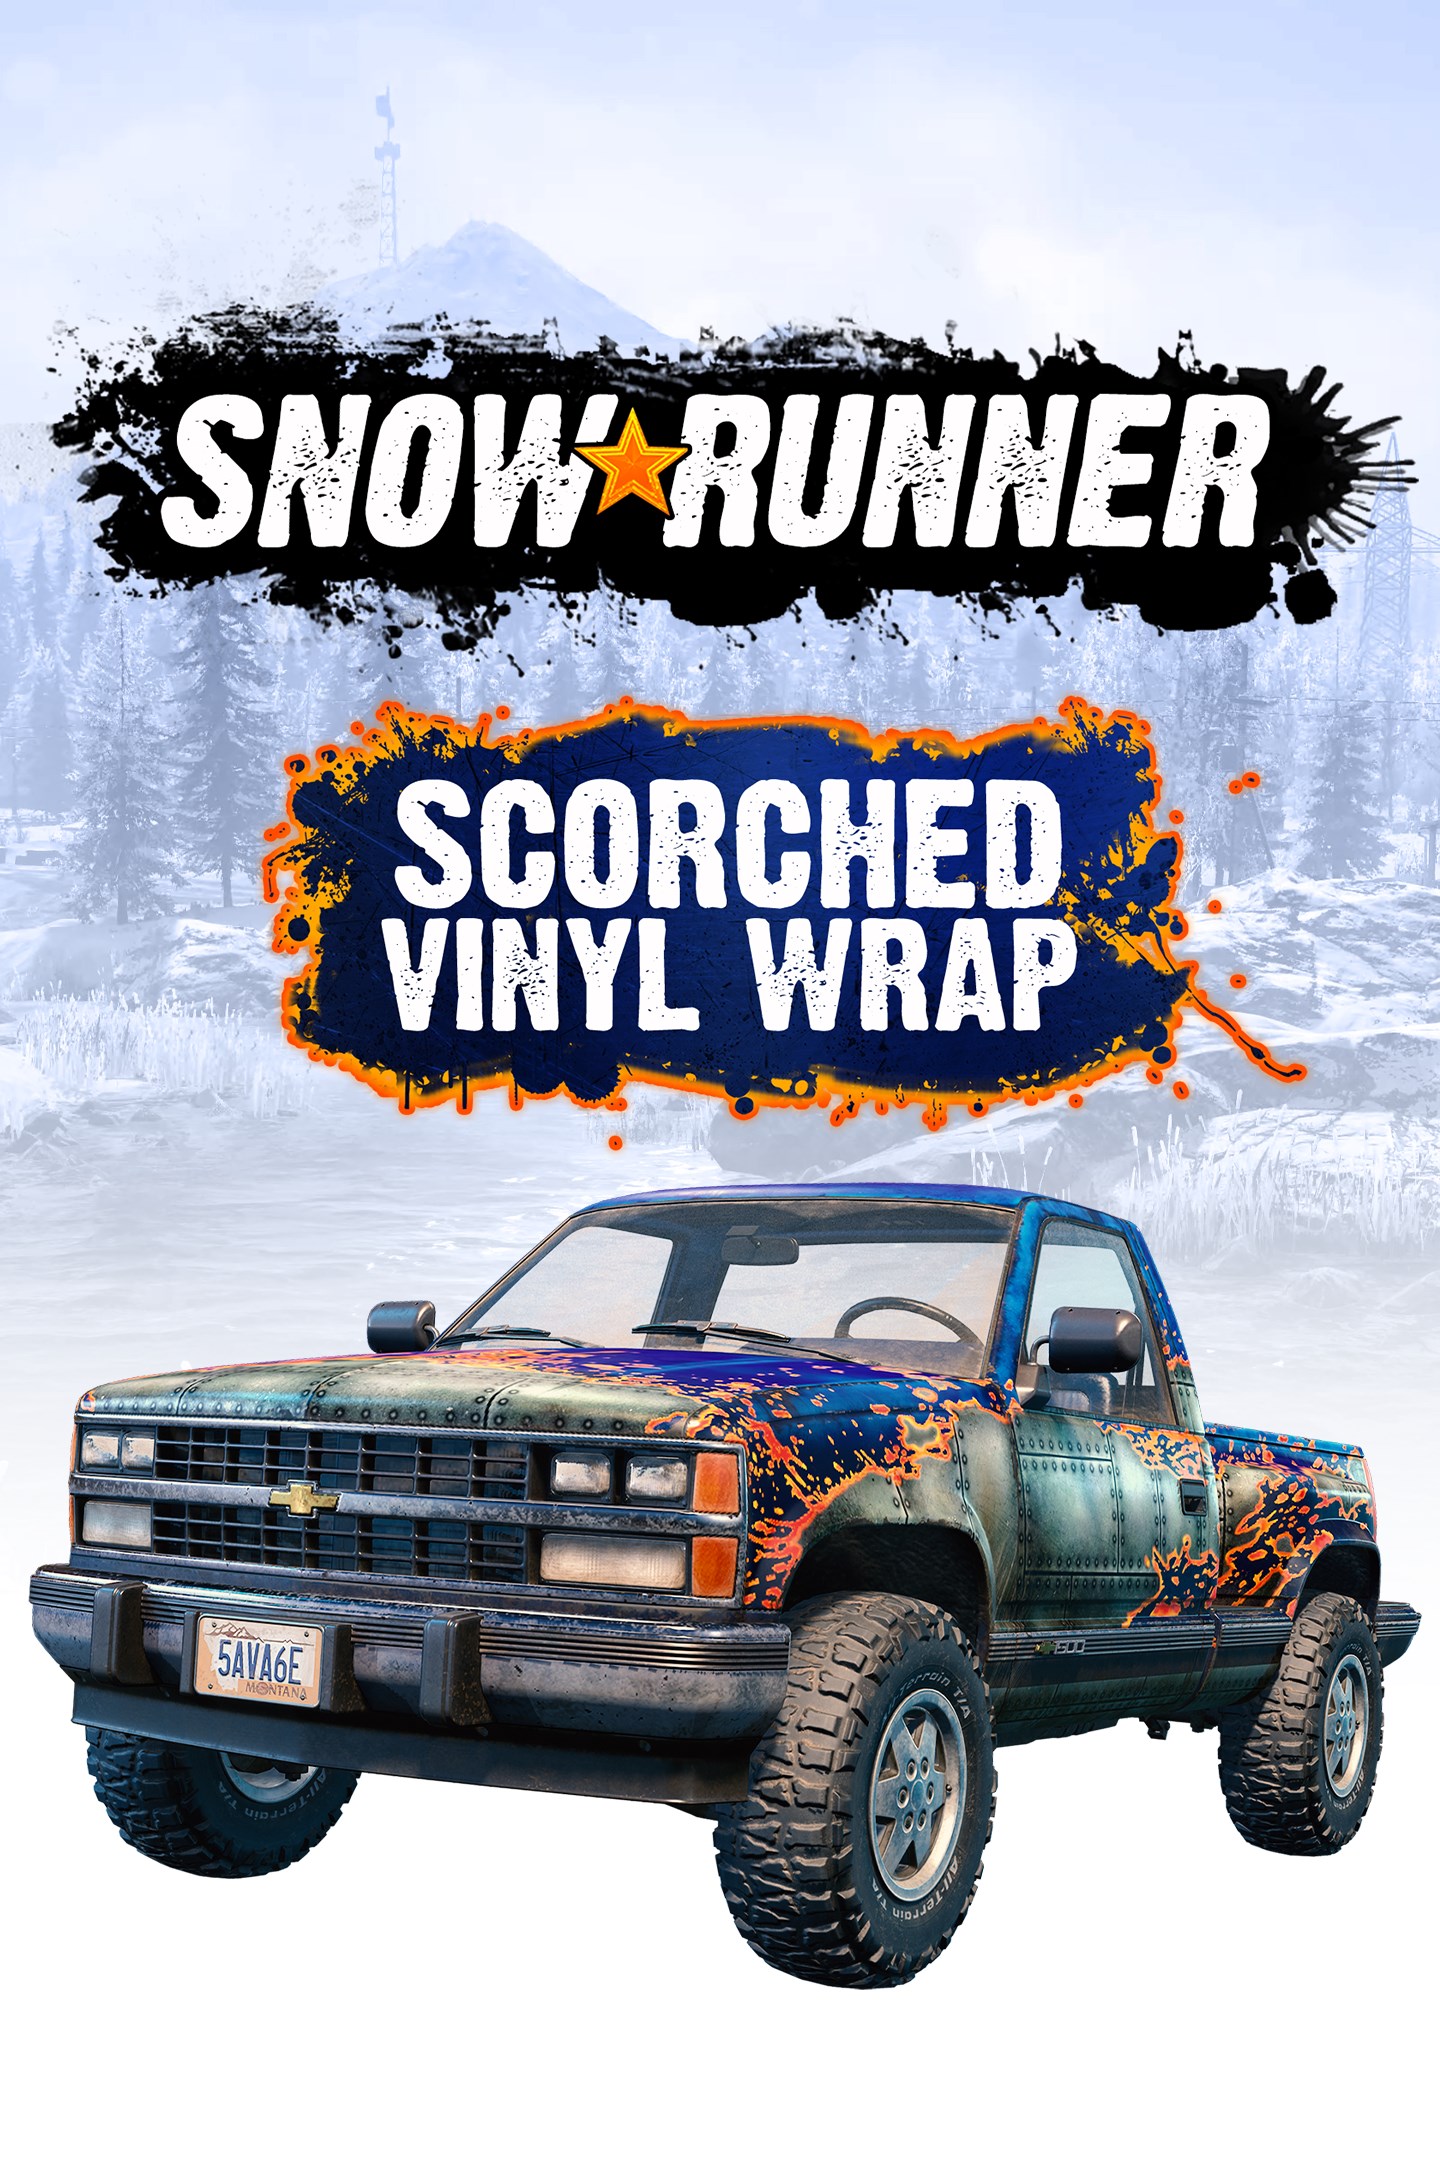 xbox store snowrunner